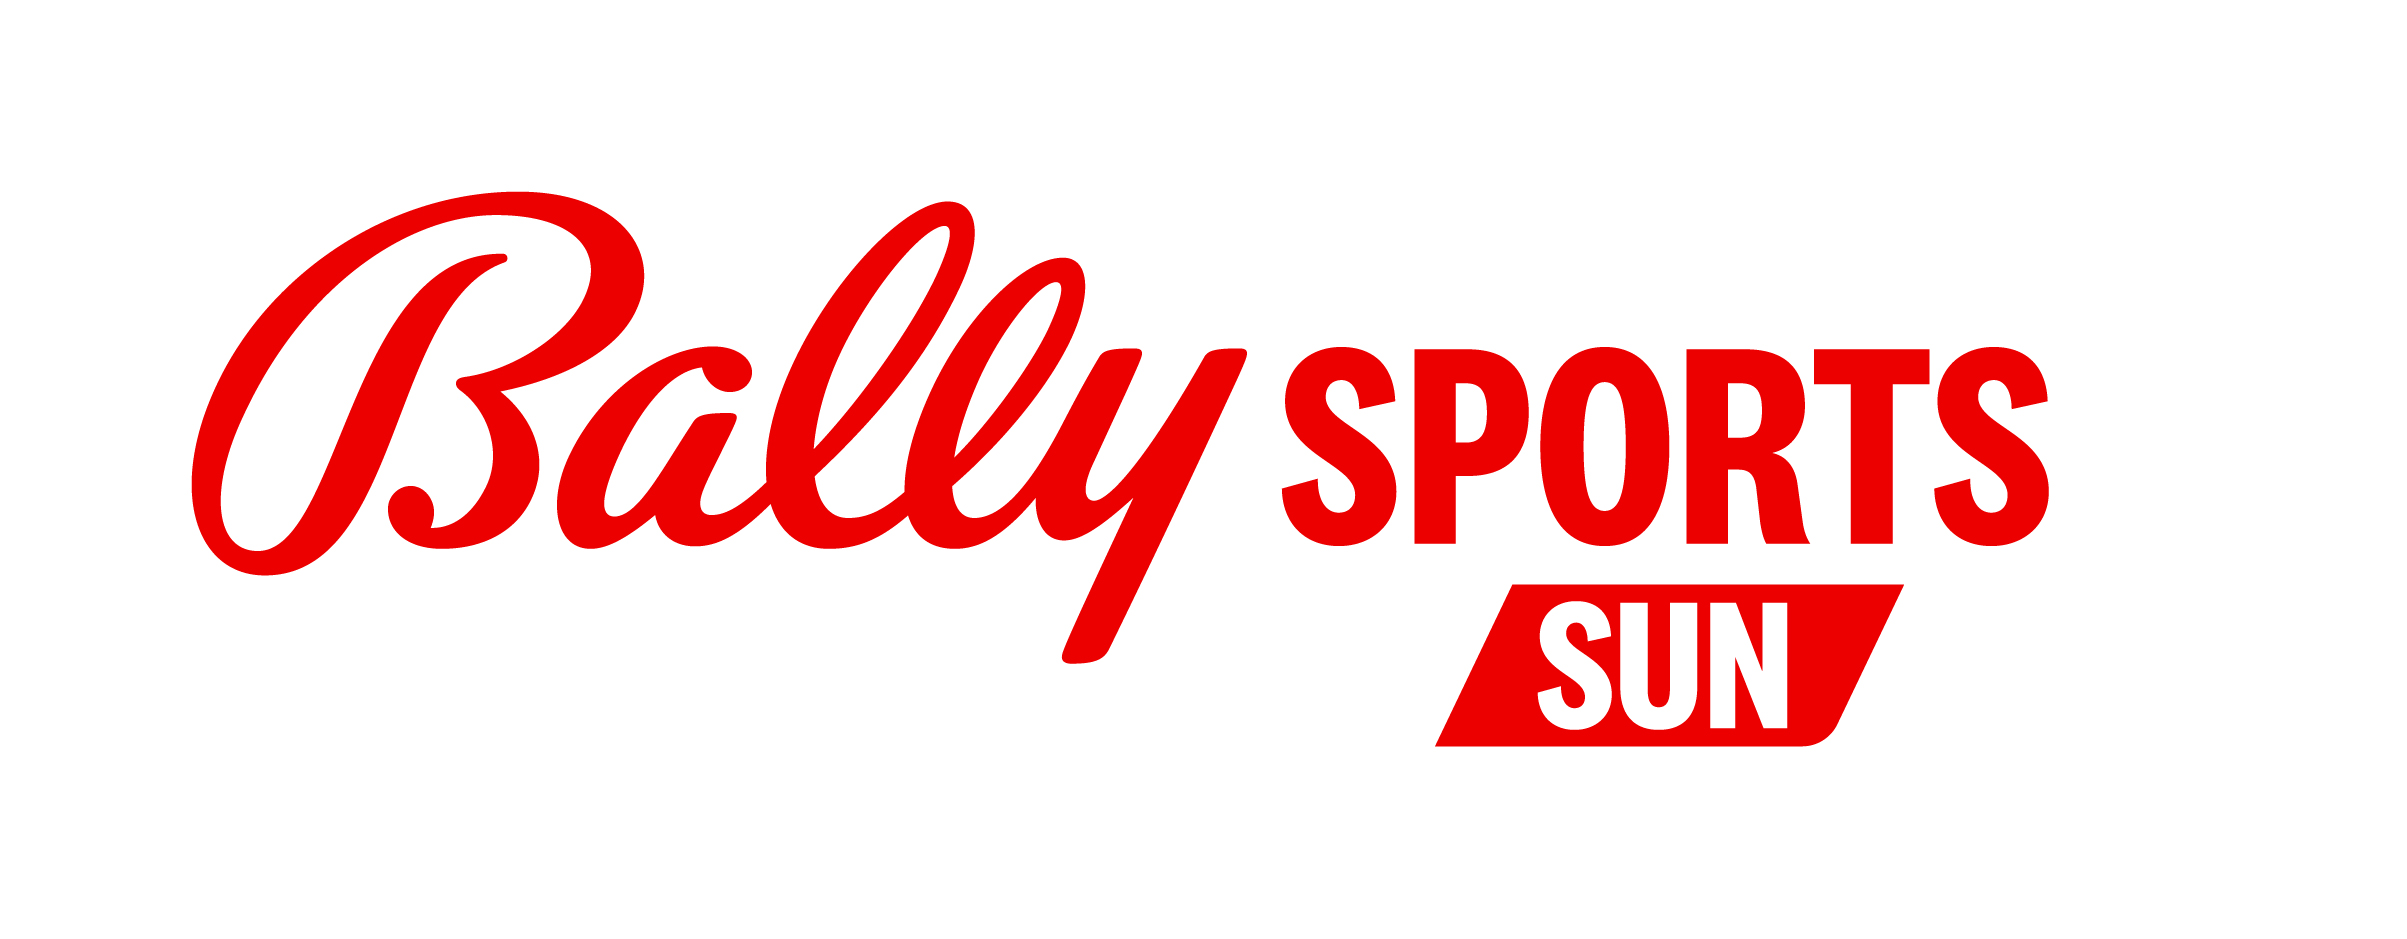 Bally Sports Sun Schedule - www.inf-inet.com